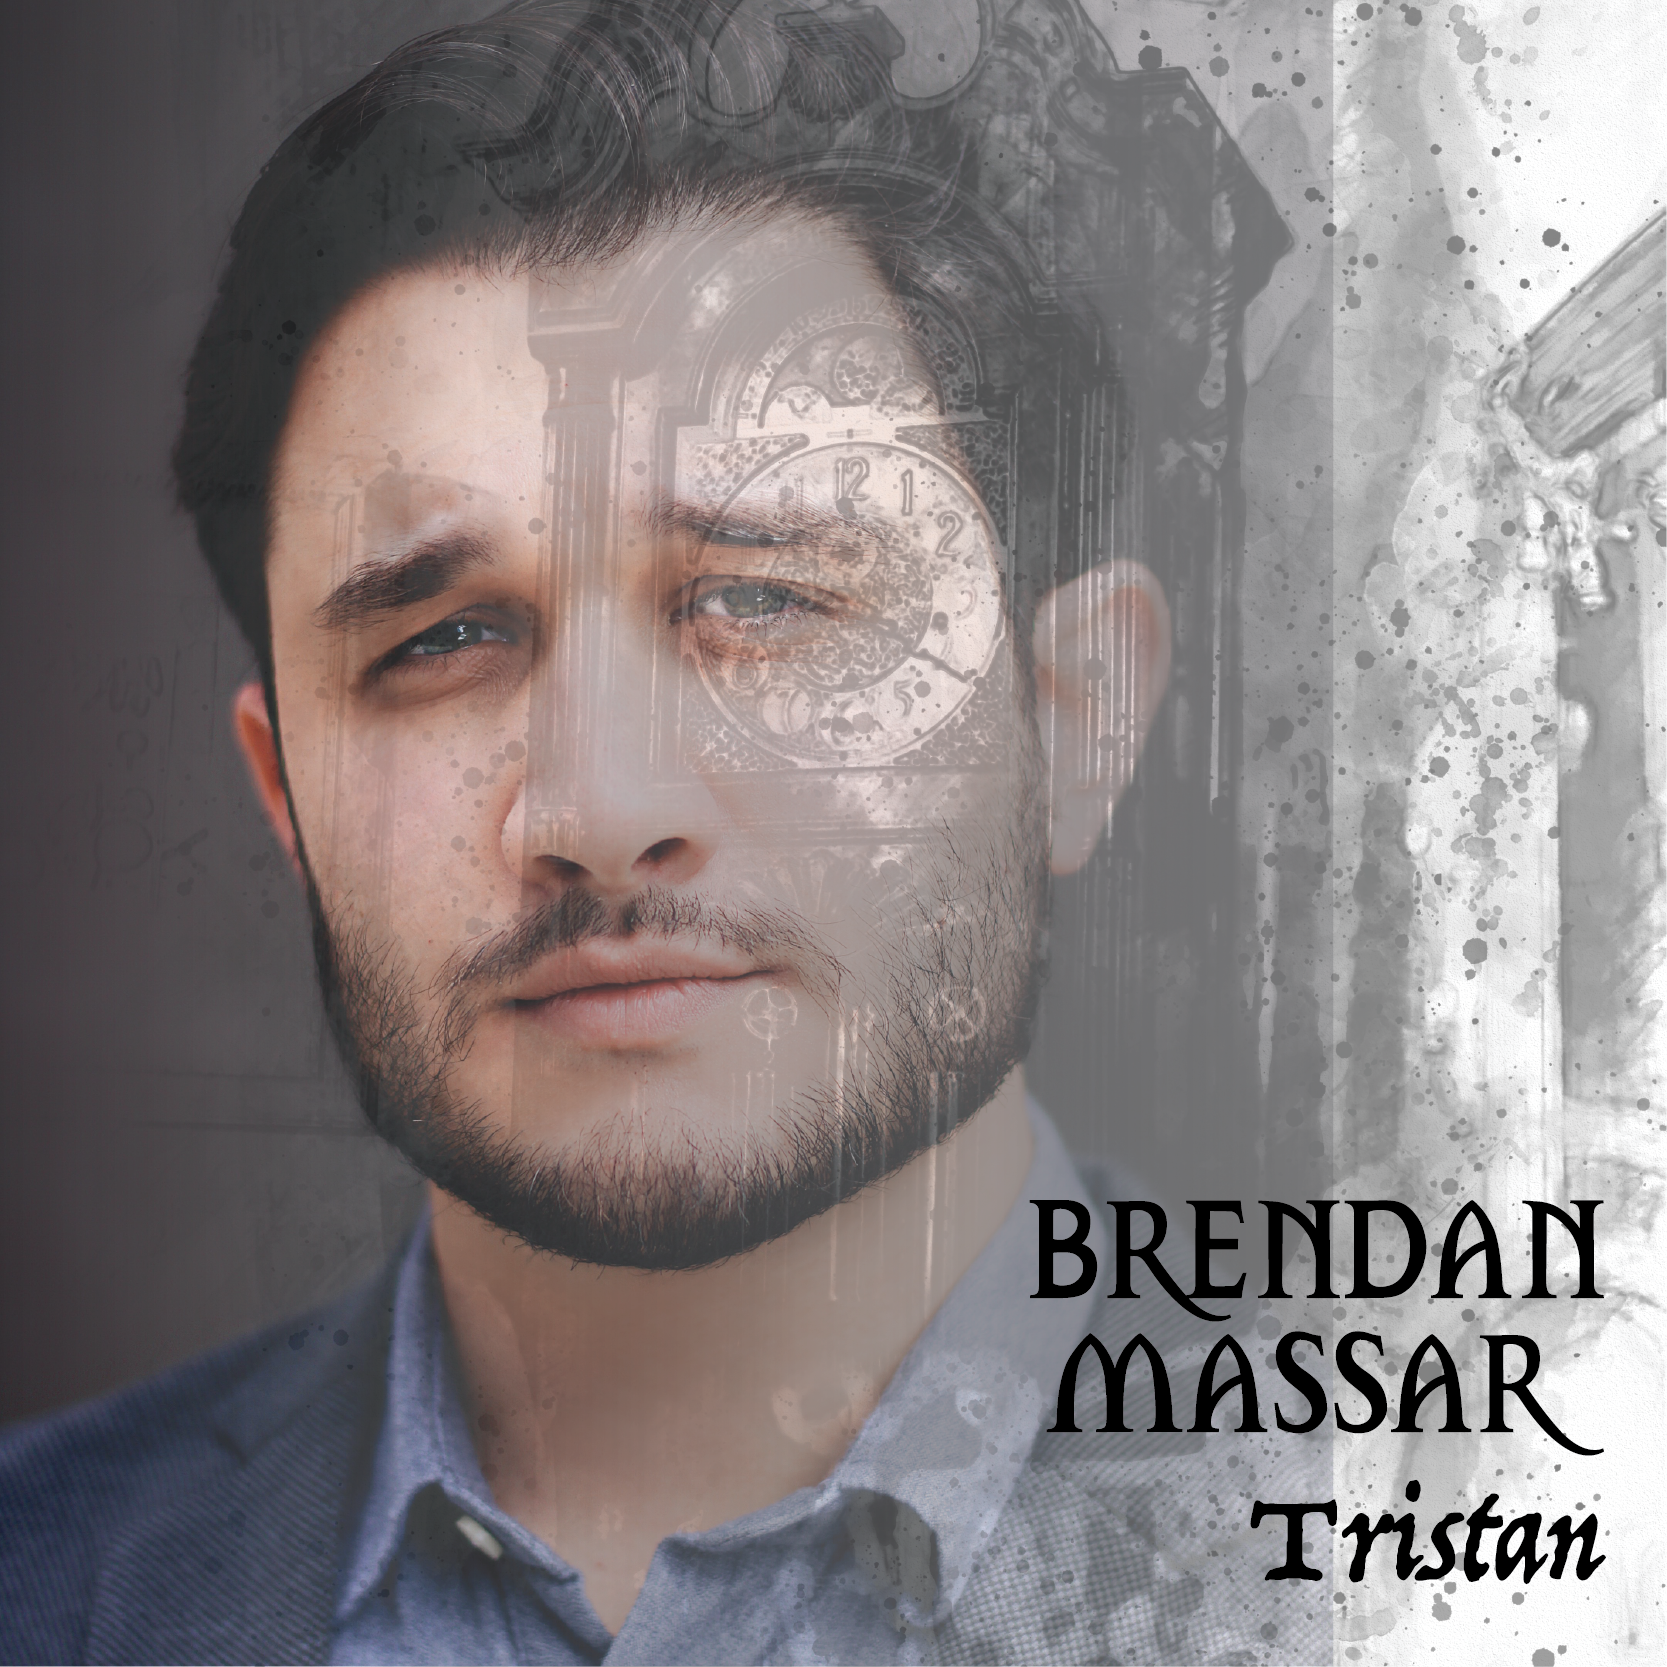 Brendan Massar